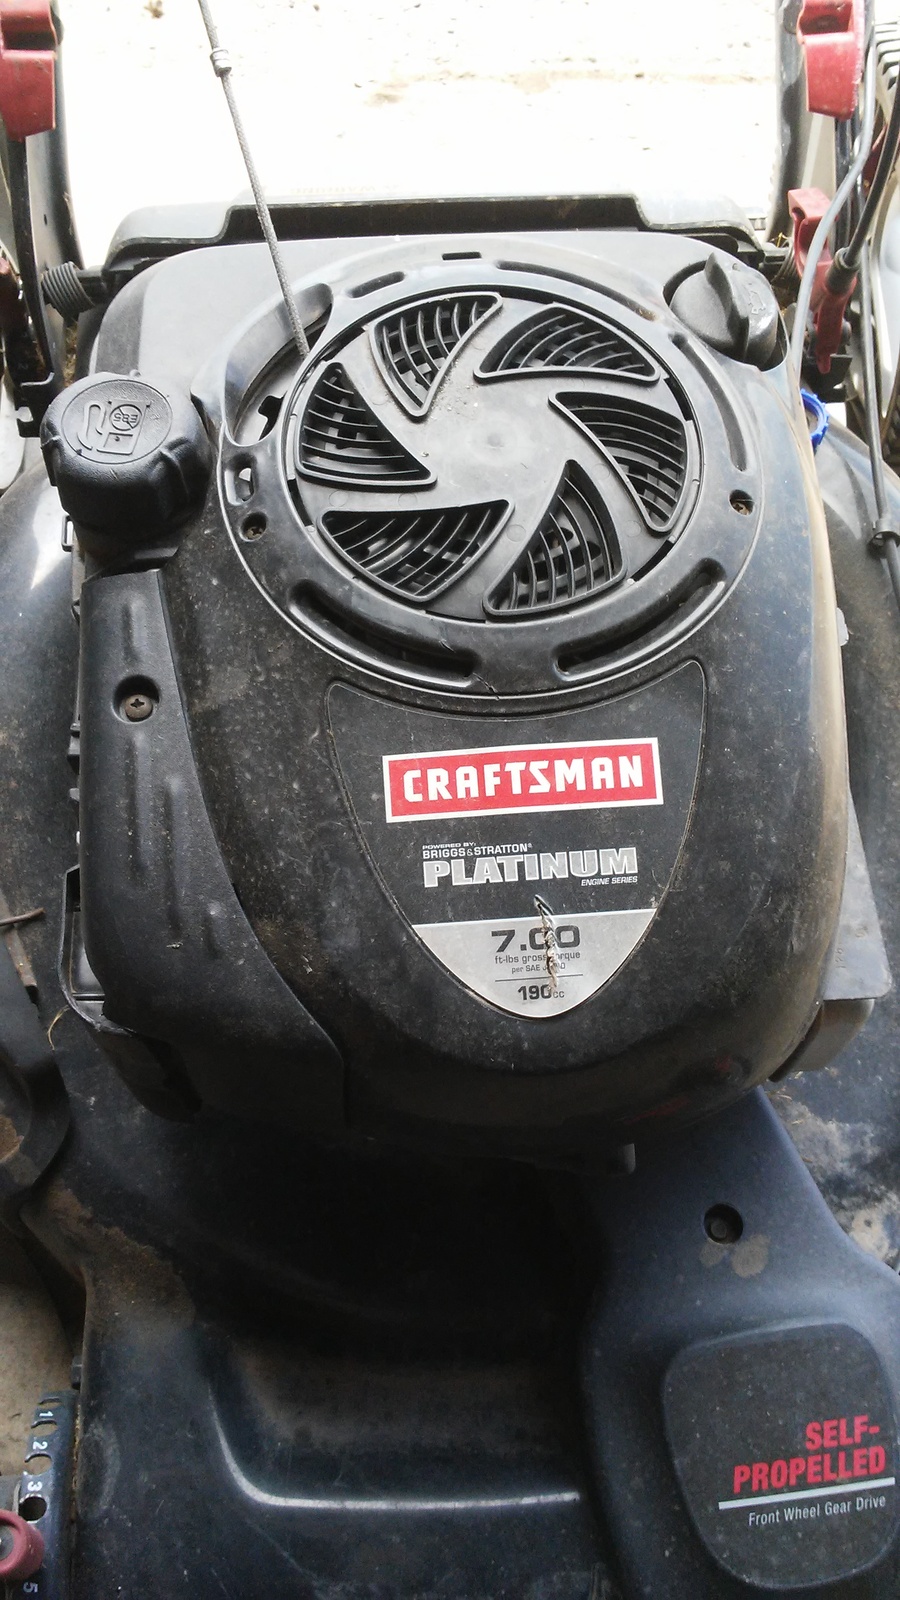 Craftsman Model 917.370680 Lawn Mower Carburetor - Parts & Accessories